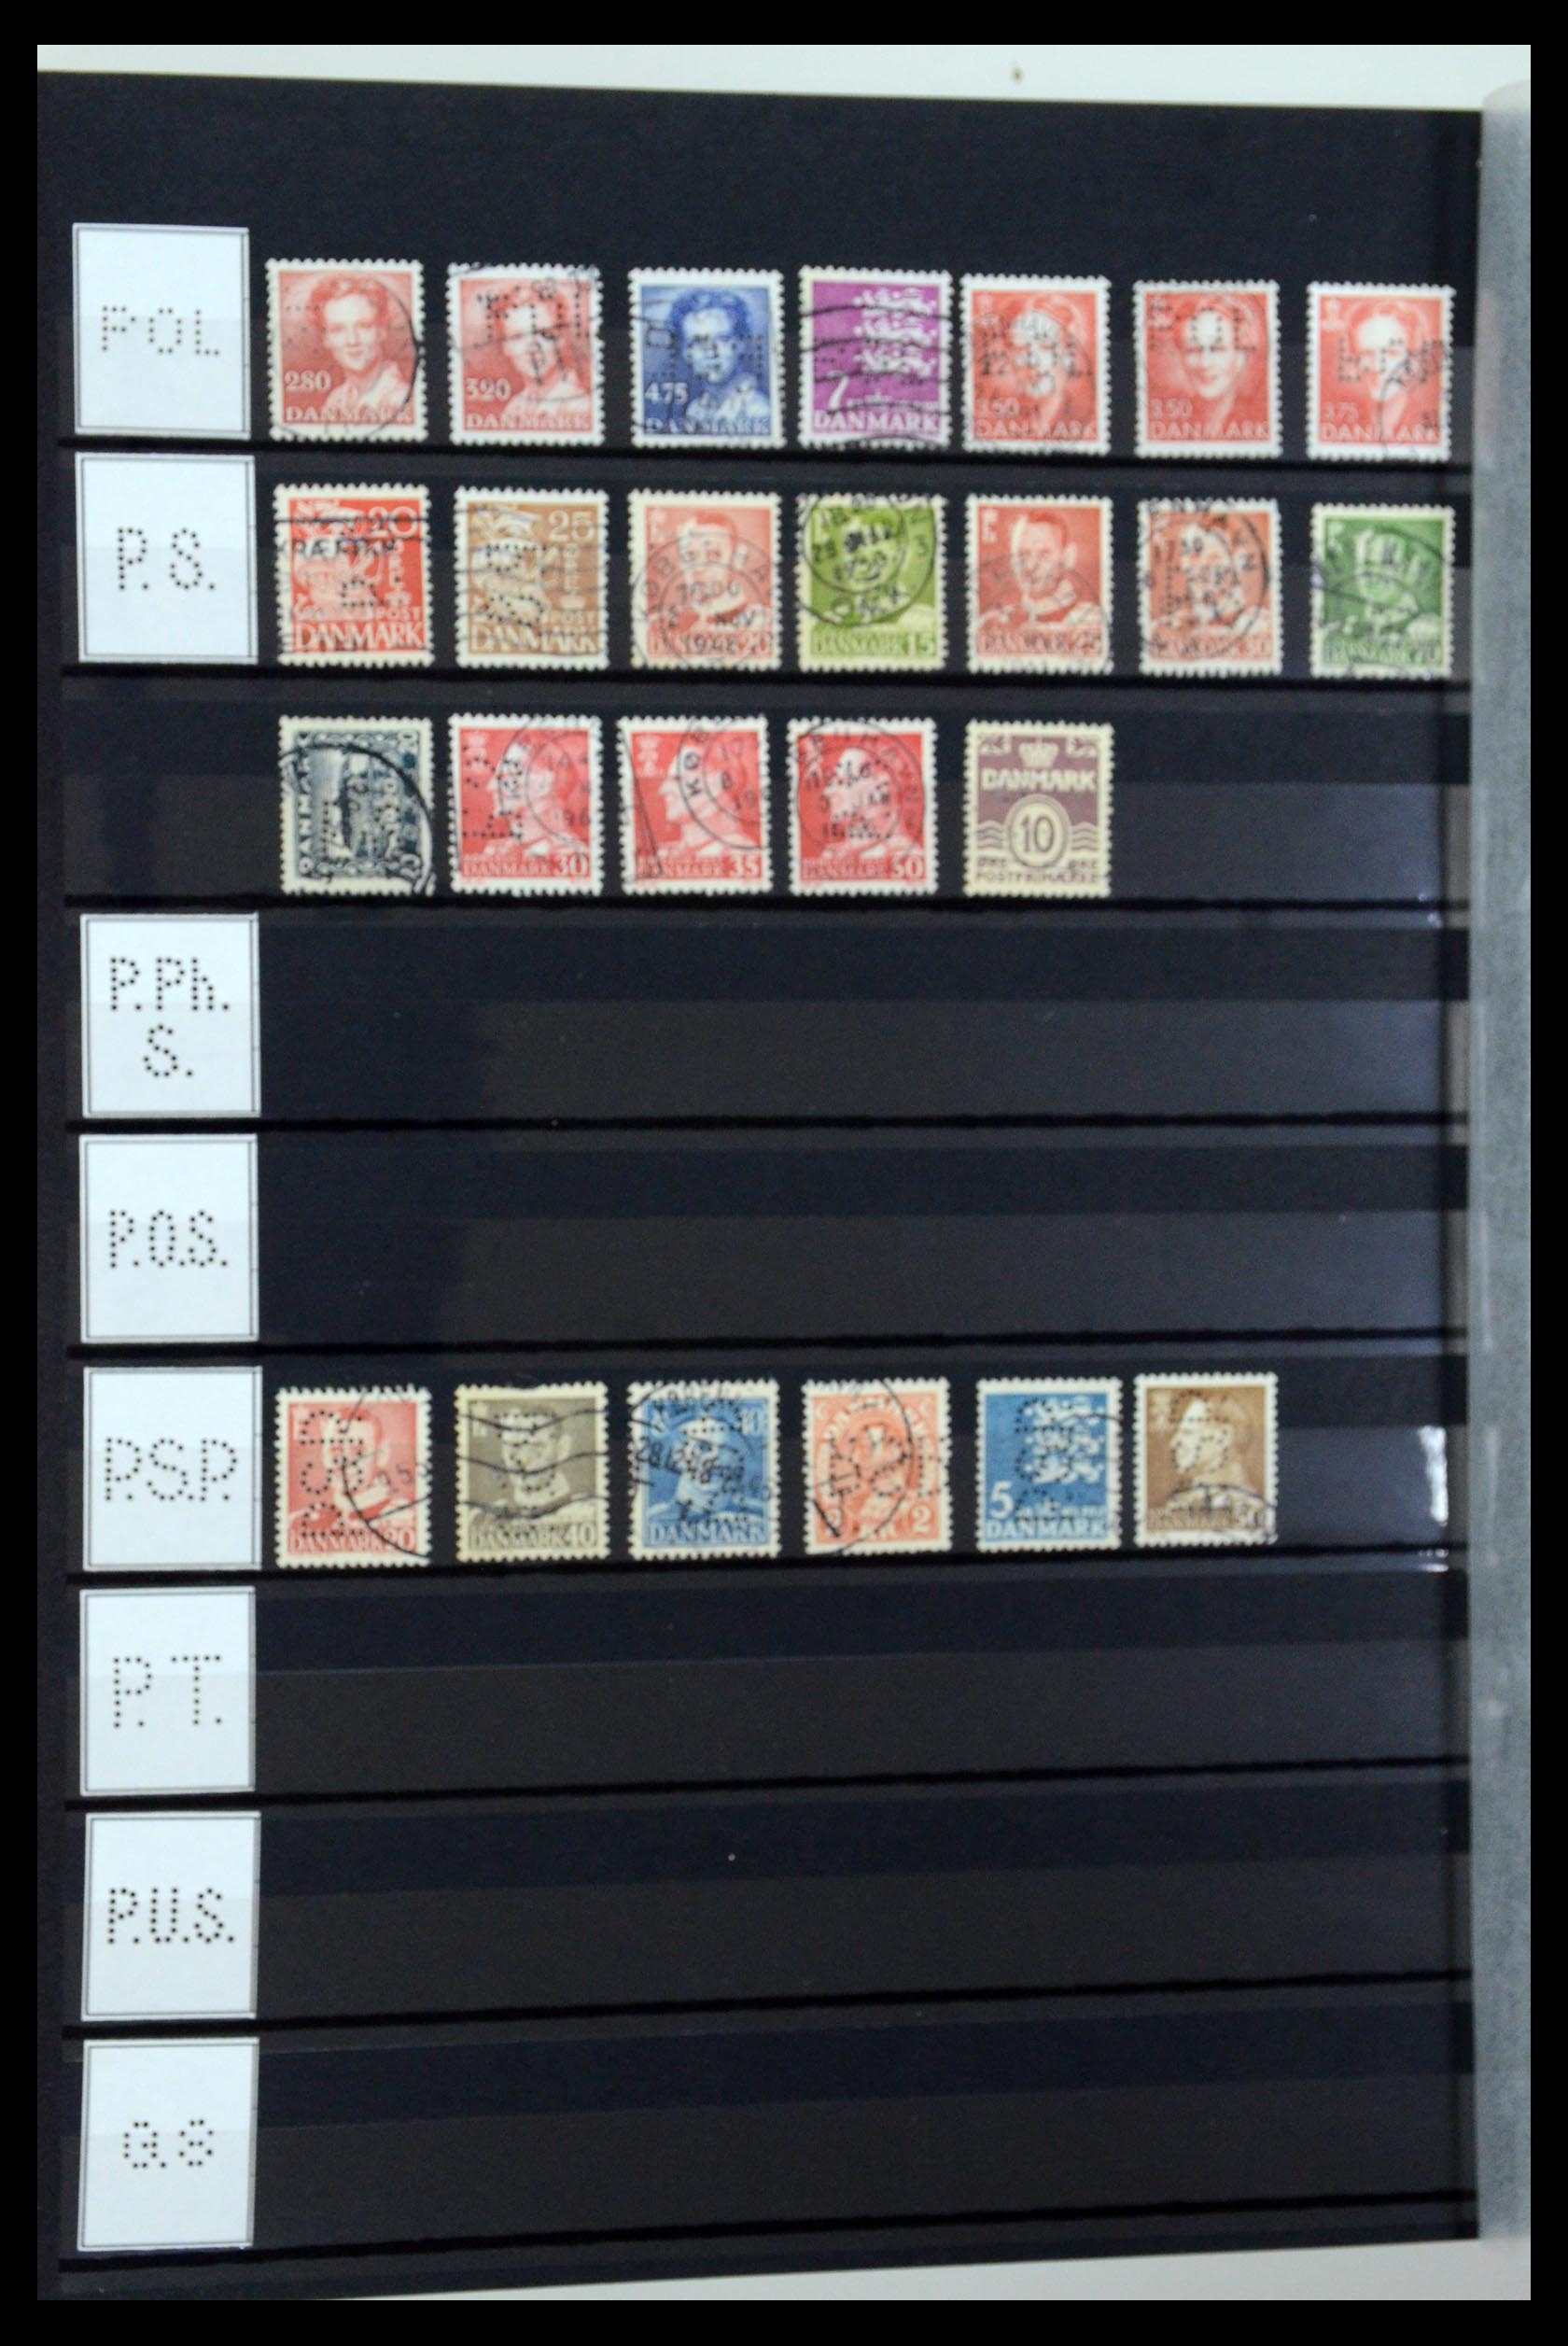 36396 197 - Stamp collection 36396 Denmark perfins.